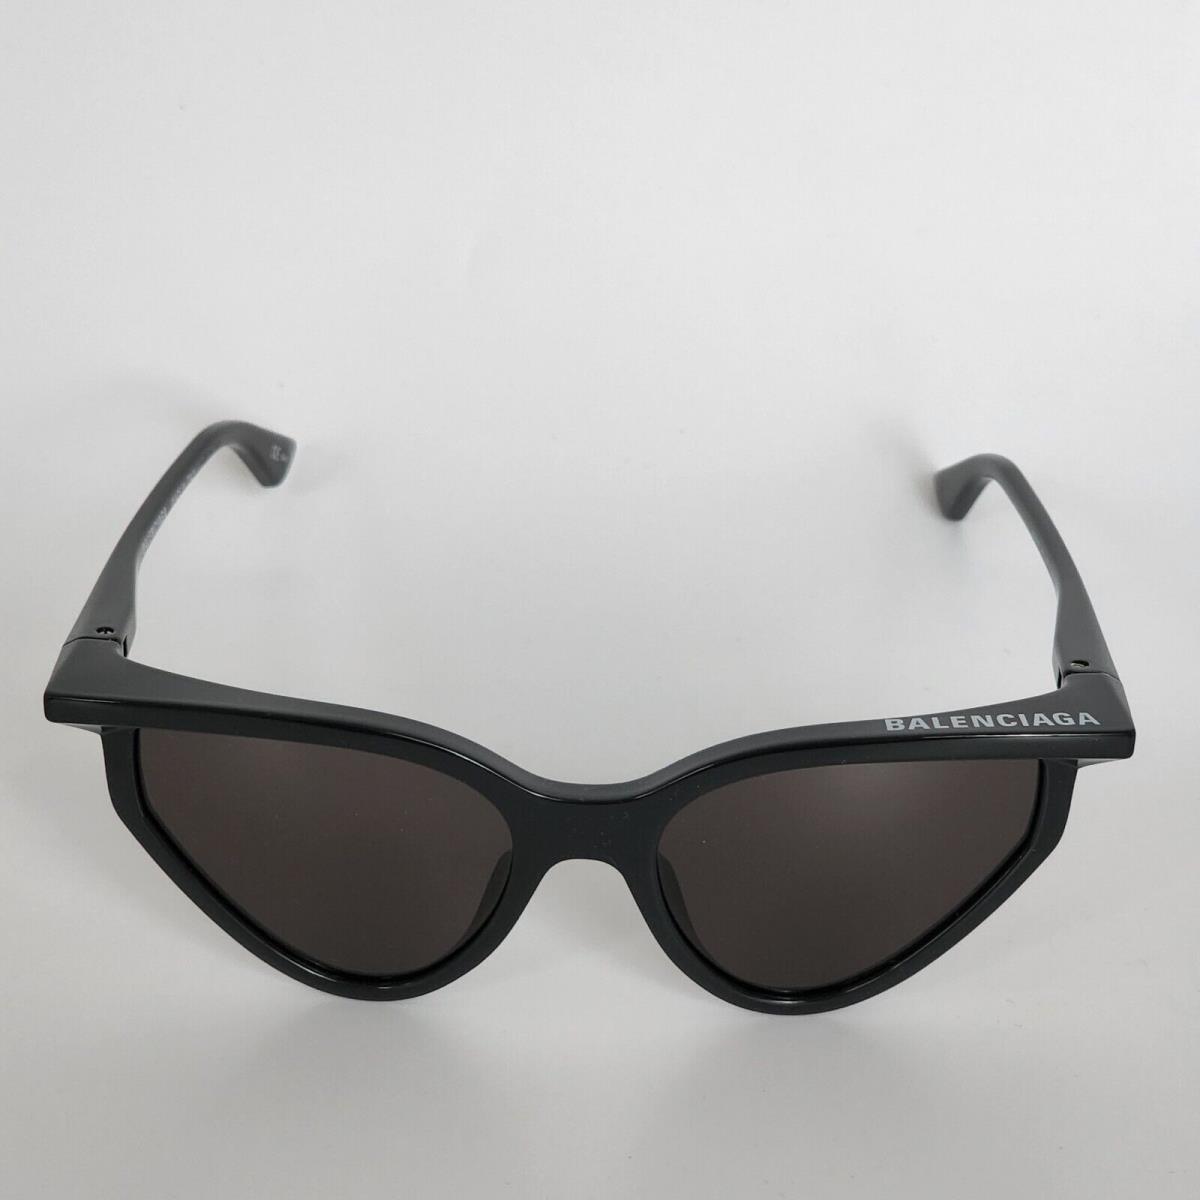 Balenciaga sunglasses  - Black Frame, Gray Lens 7